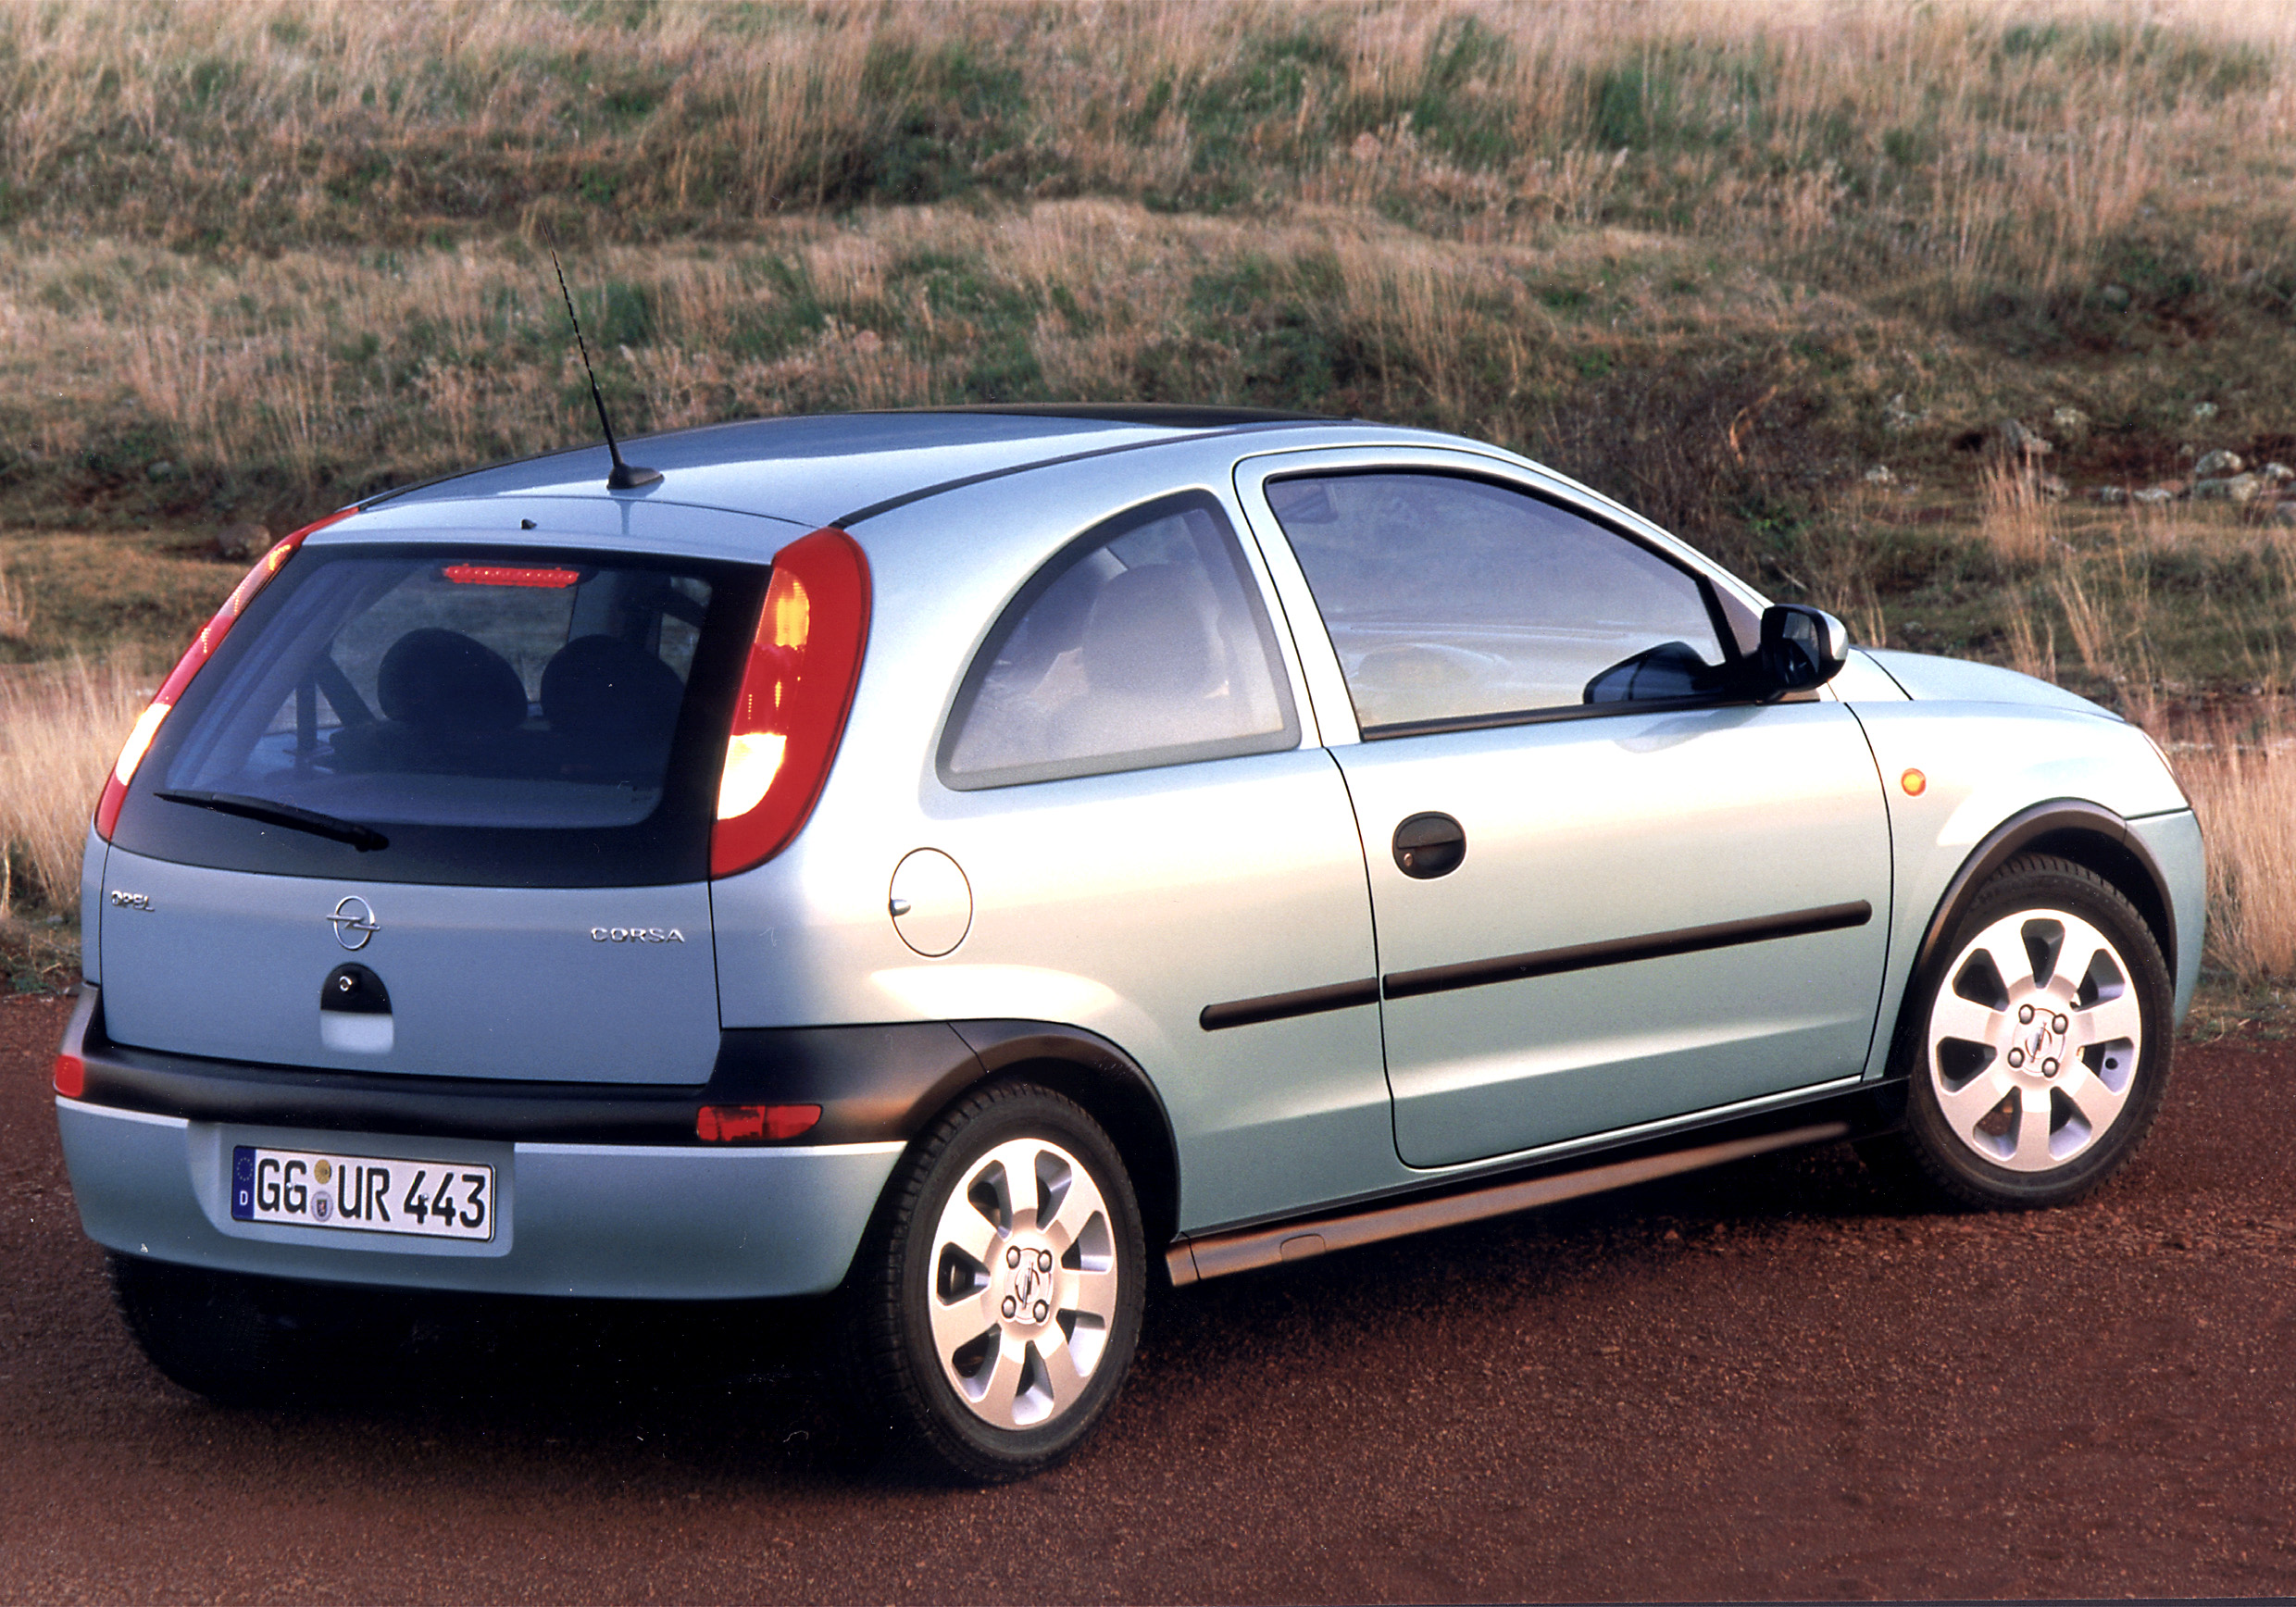 Opel corsa 1.0. Opel Corsa c 2003. Opel Corsa 2000. Opel Corsa 1.2 2003. Opel Corsa c 1.4.